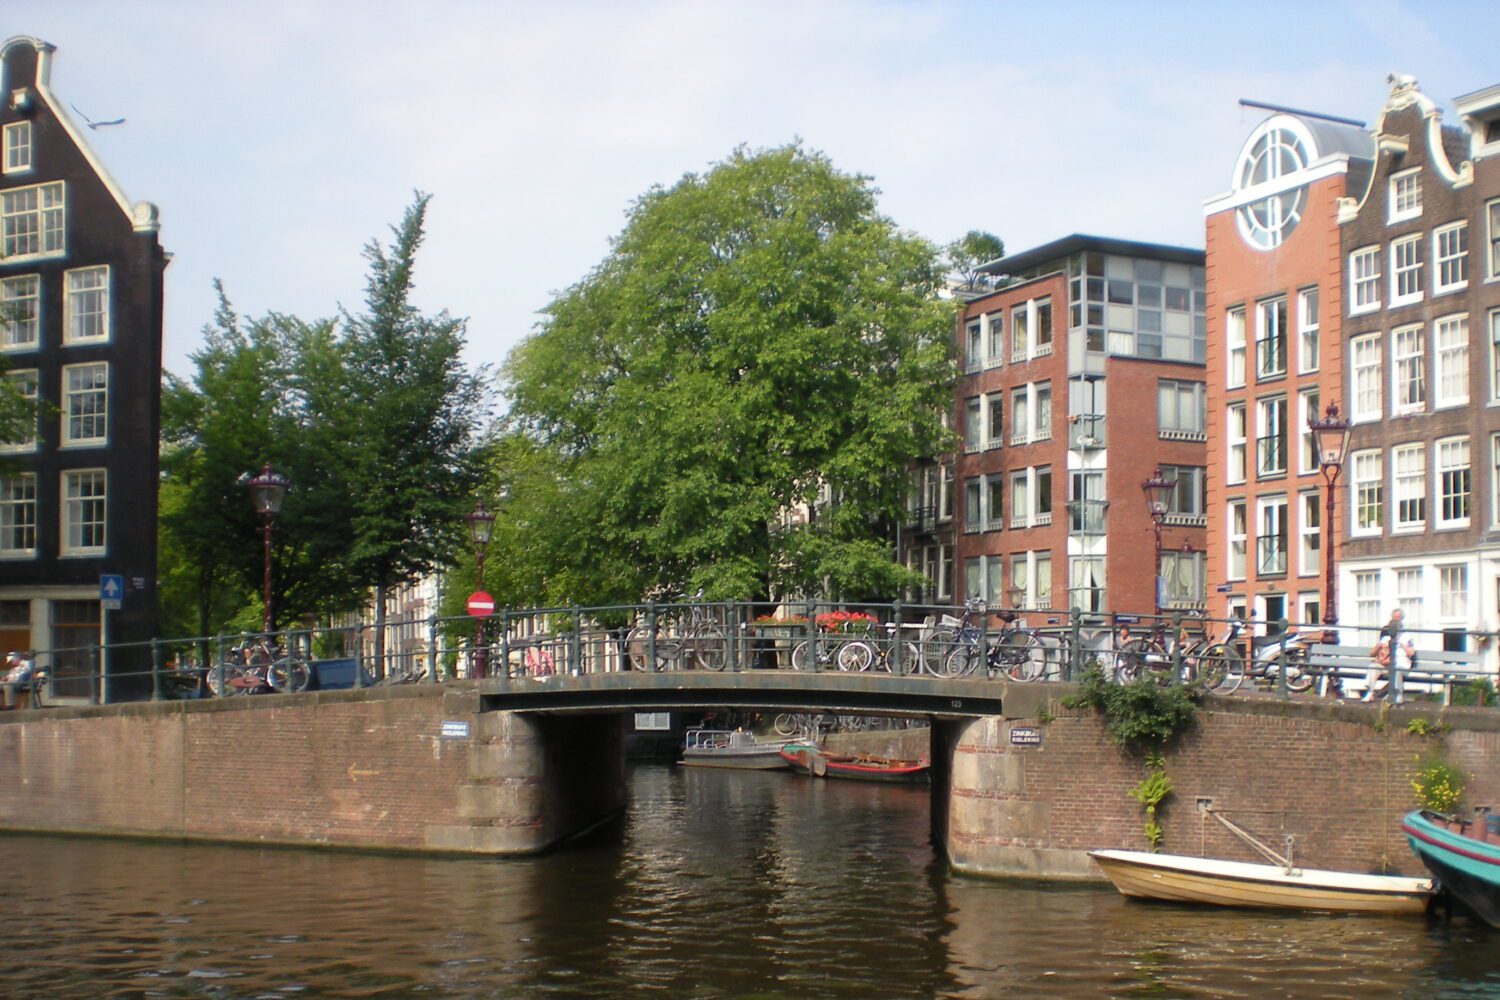 Bridges and canals abound in Amsterdam’s historic centrum